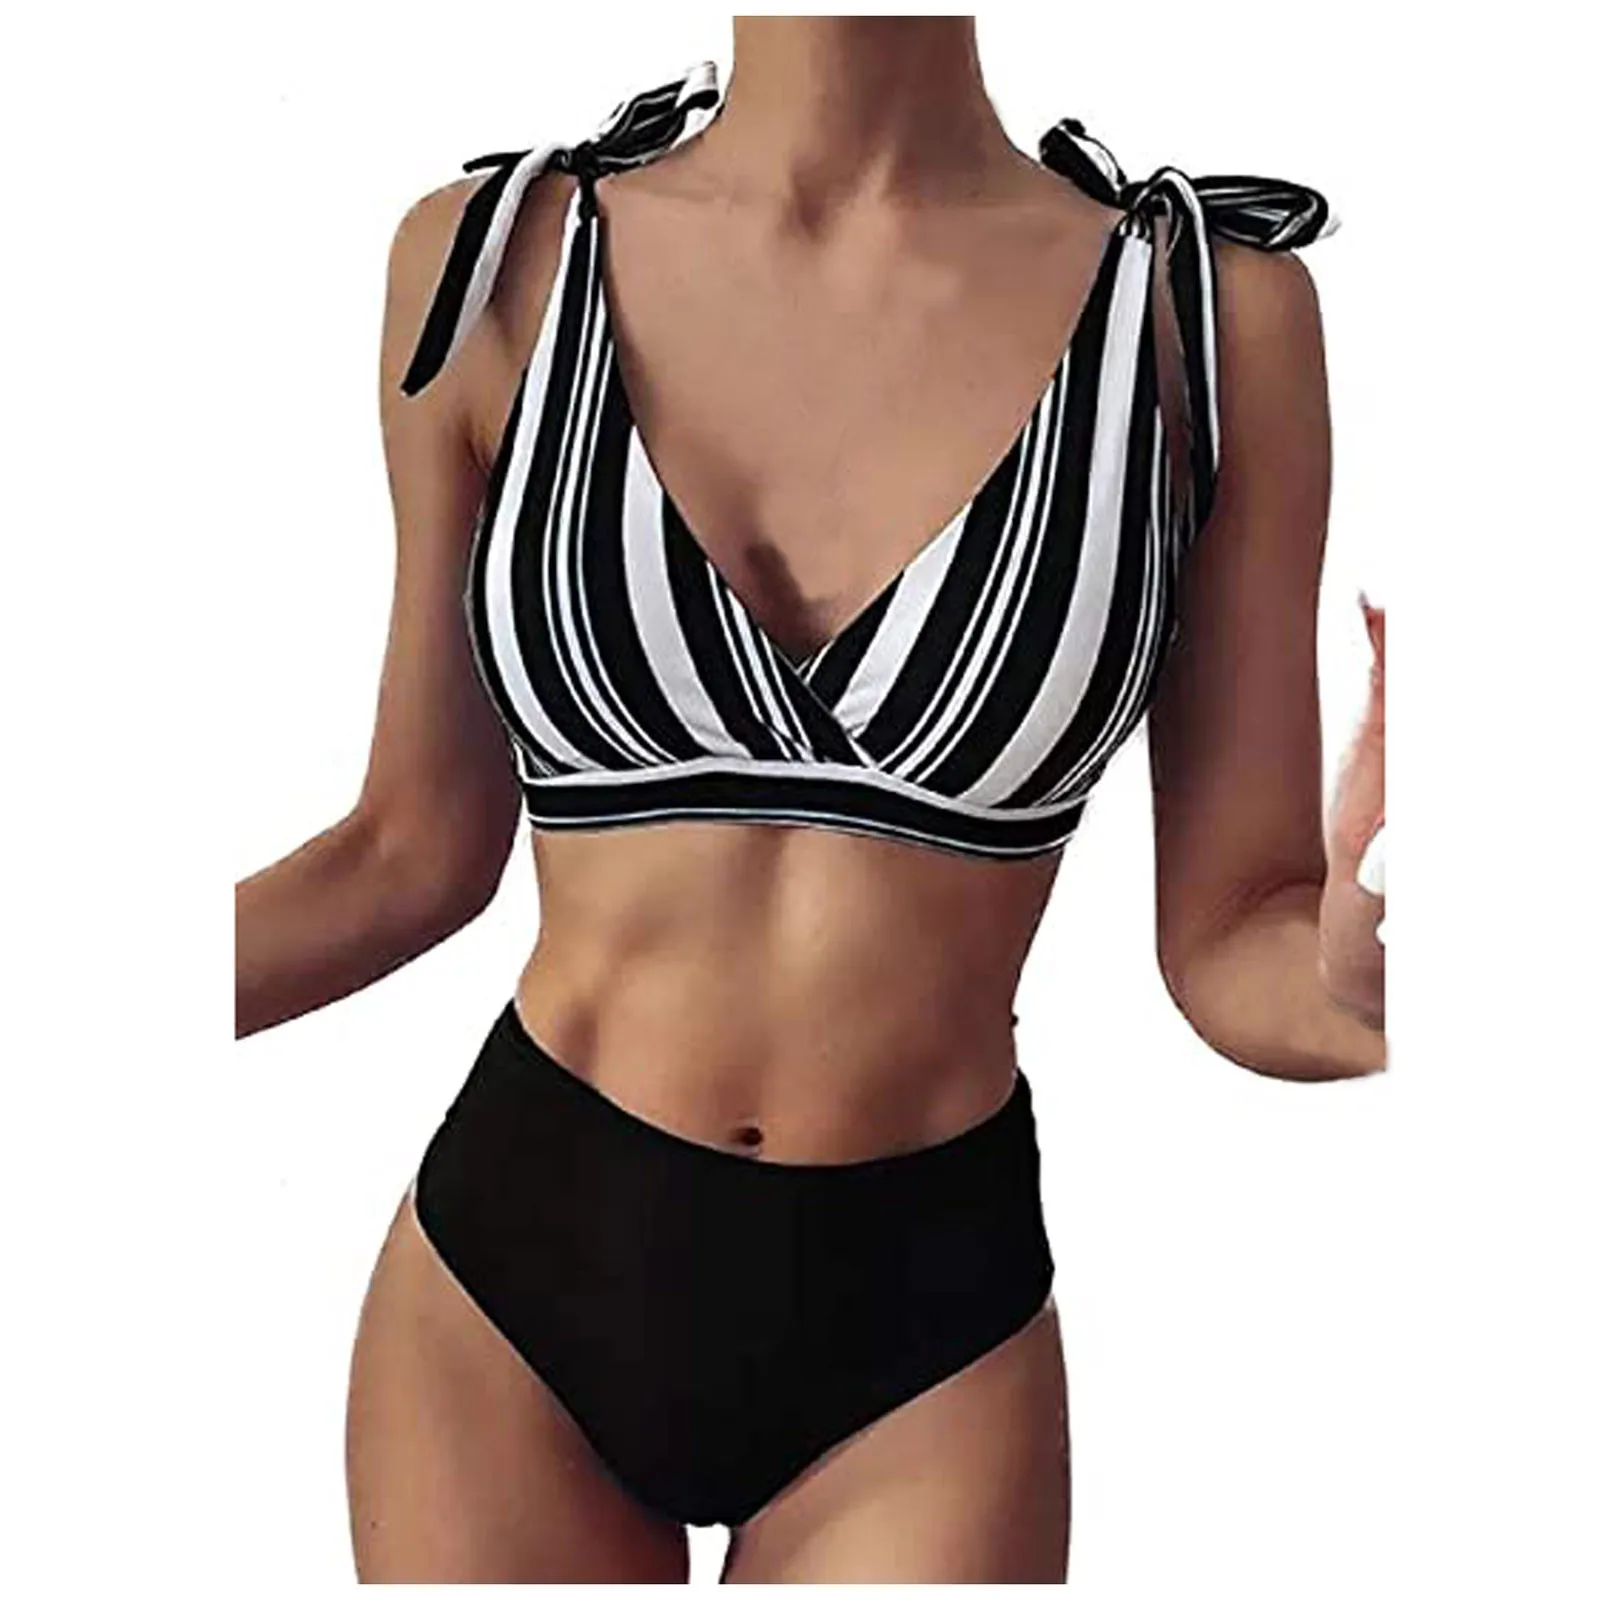 

Summer Swimsuit Bikini Set For Women Black White Stripe Two Piece Swimwear Bandage Push Up Padded Beachwear 2021 biquinis A40